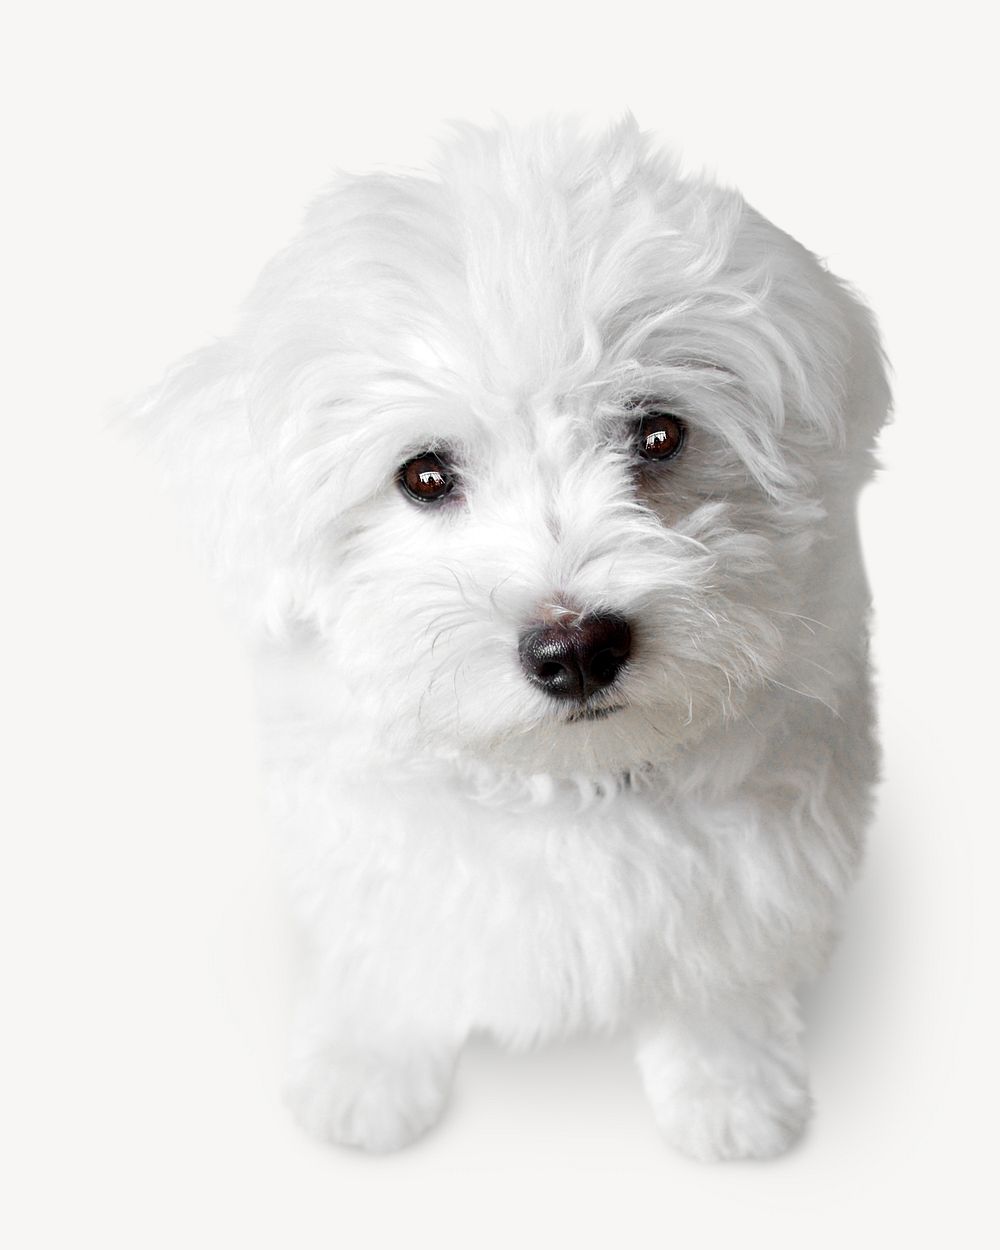 White puppy image on white